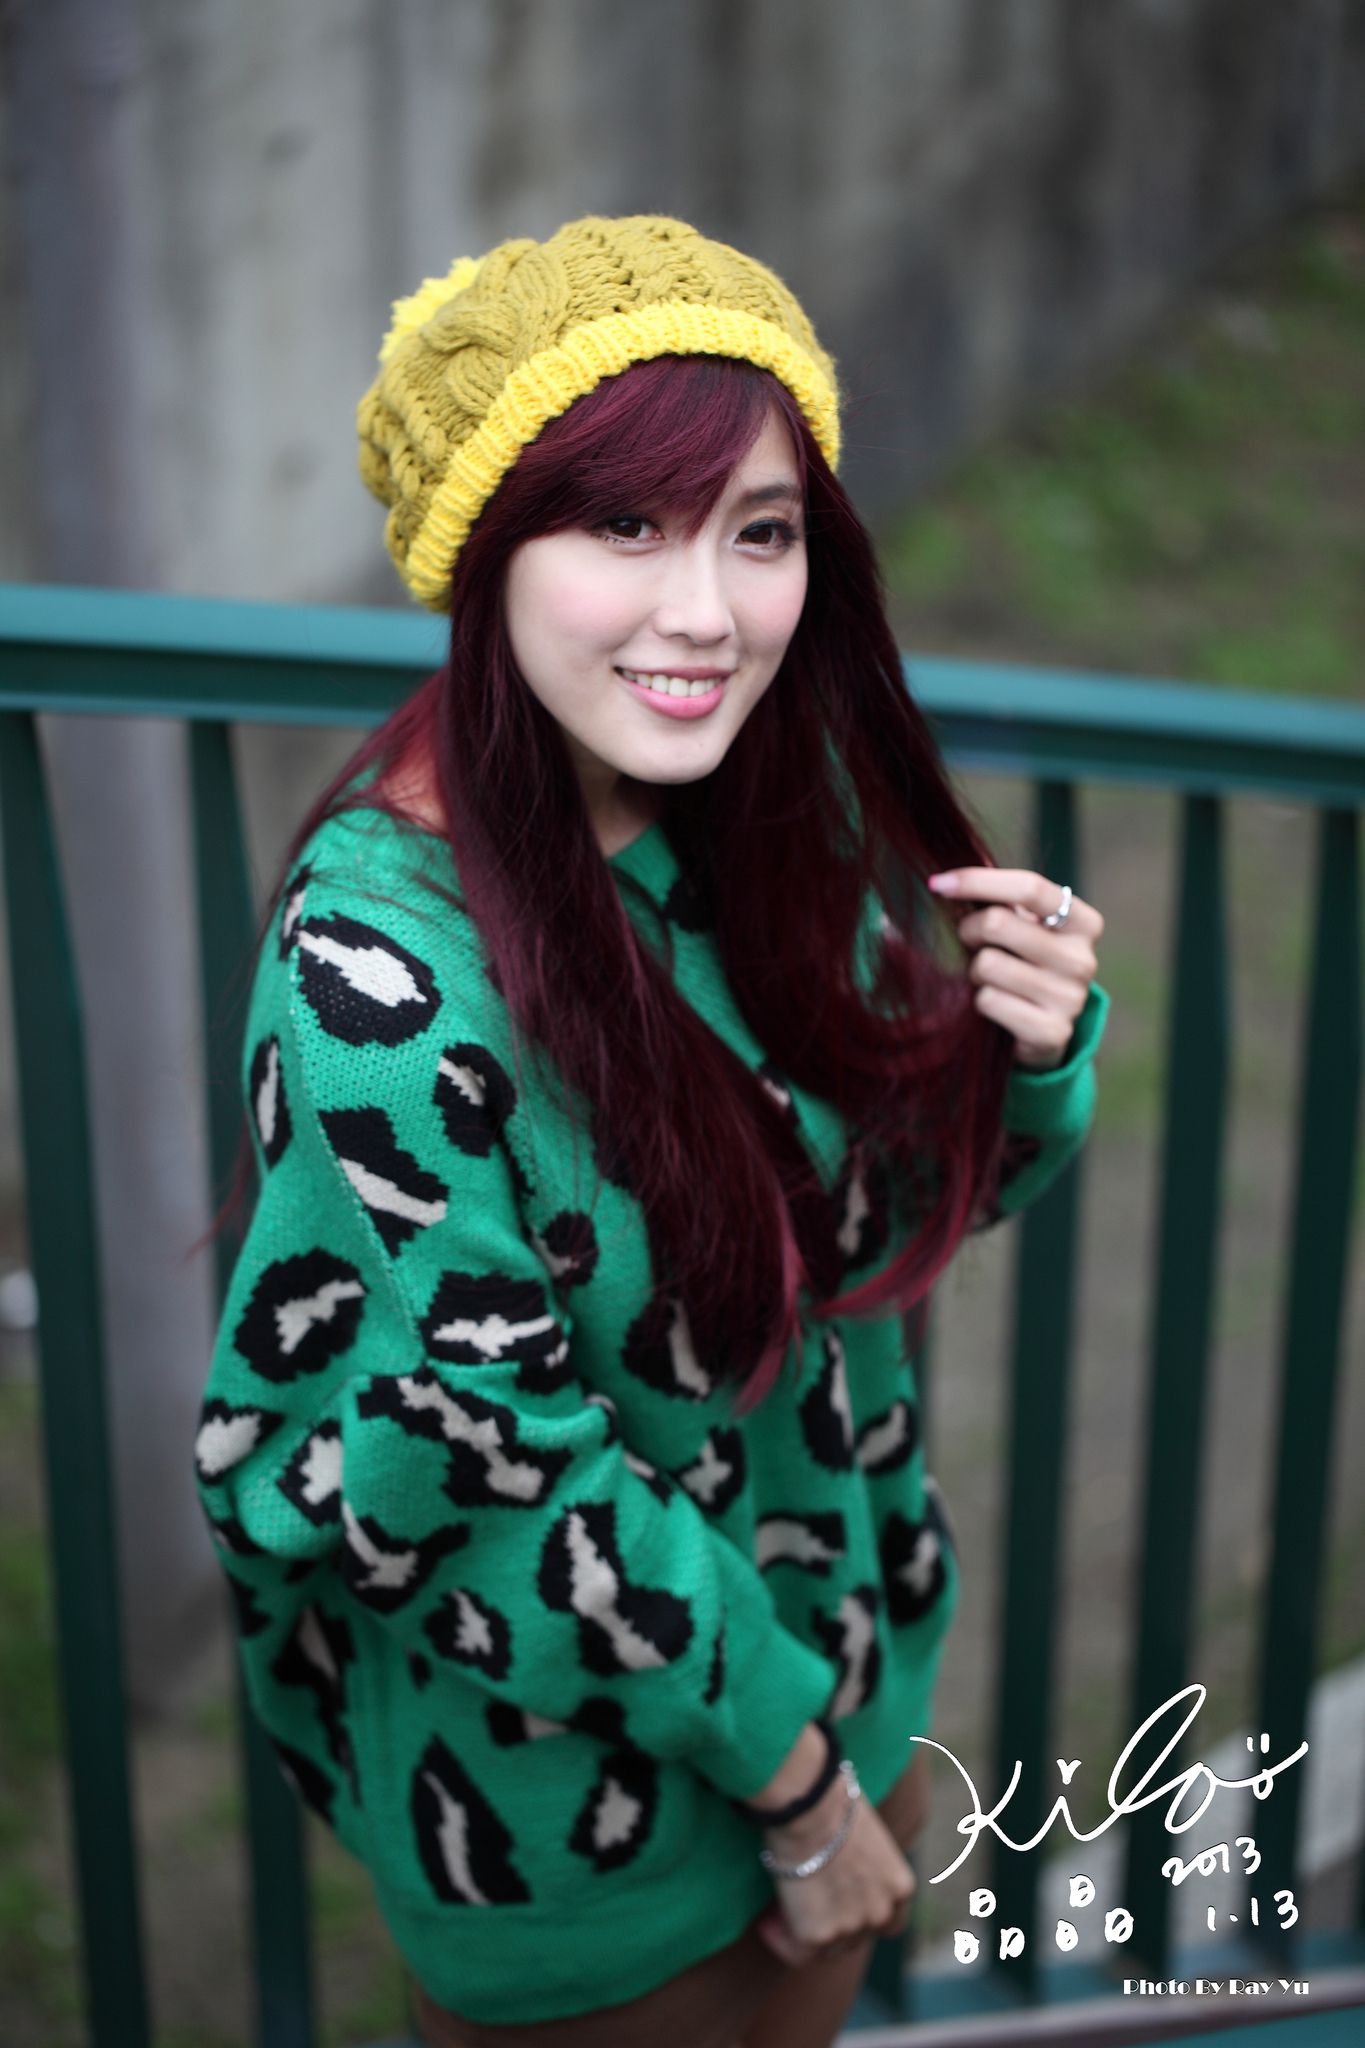 Taiwan model Liao Qiqi / KILA Crystal “Green Coat + Boots” Street Beat Photo